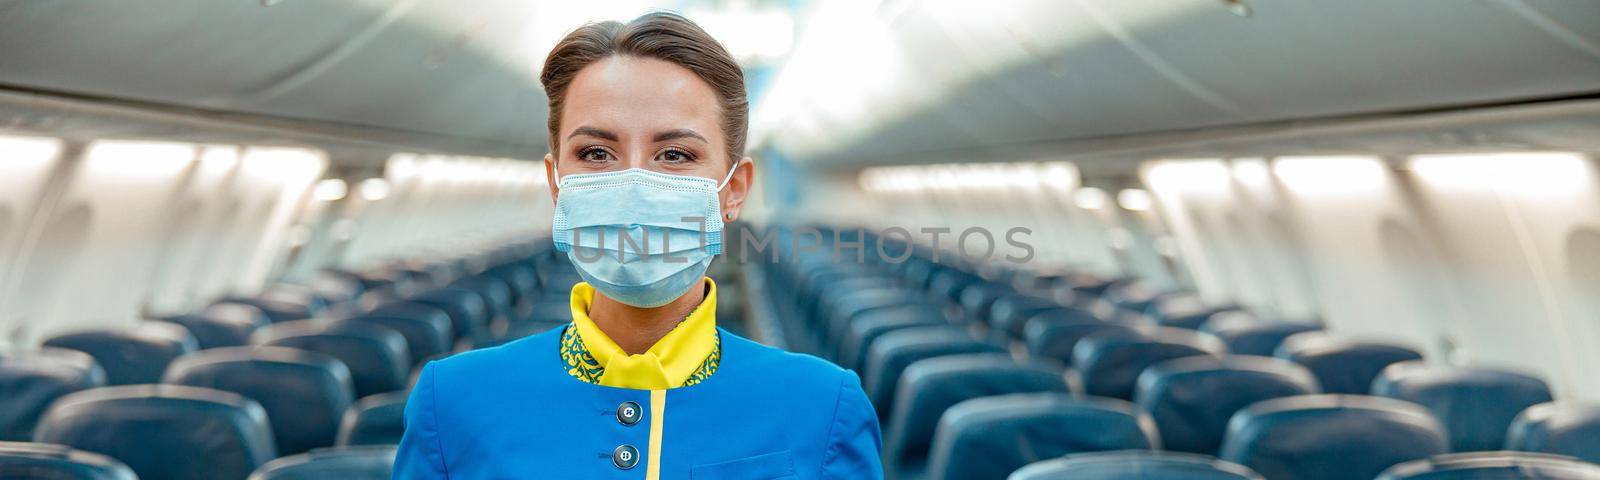 Stewardess in medical mask standing in passenger aircraft cabin by Yaroslav_astakhov